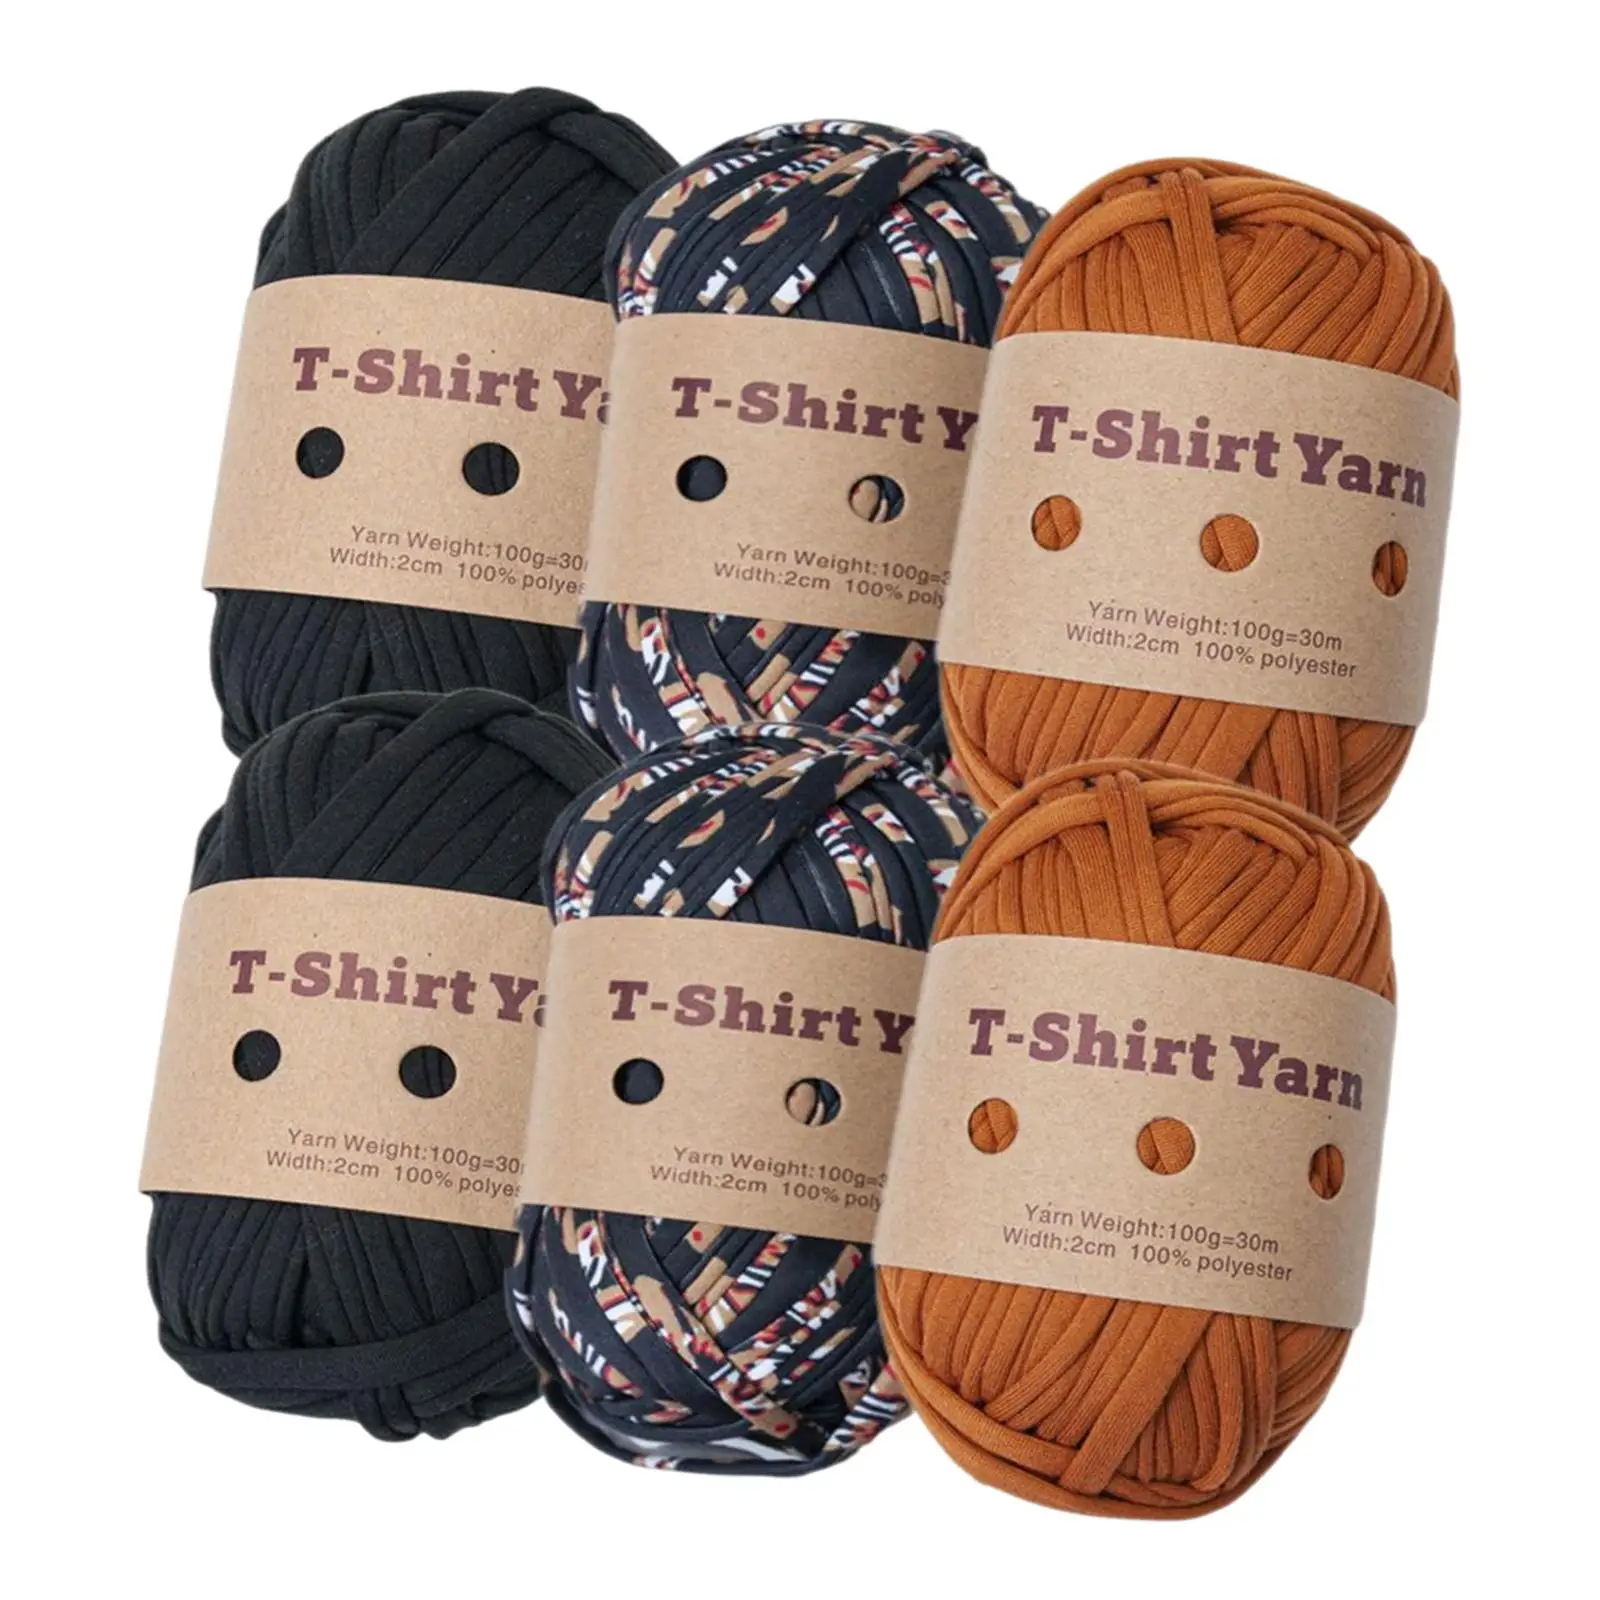 6x T-shirt Yarn Knitting Yarn Set Spaghetti Yarn Fabric Cloth Yarn for Rugs Throw Blanket Pet Bed Home Decor Handbag